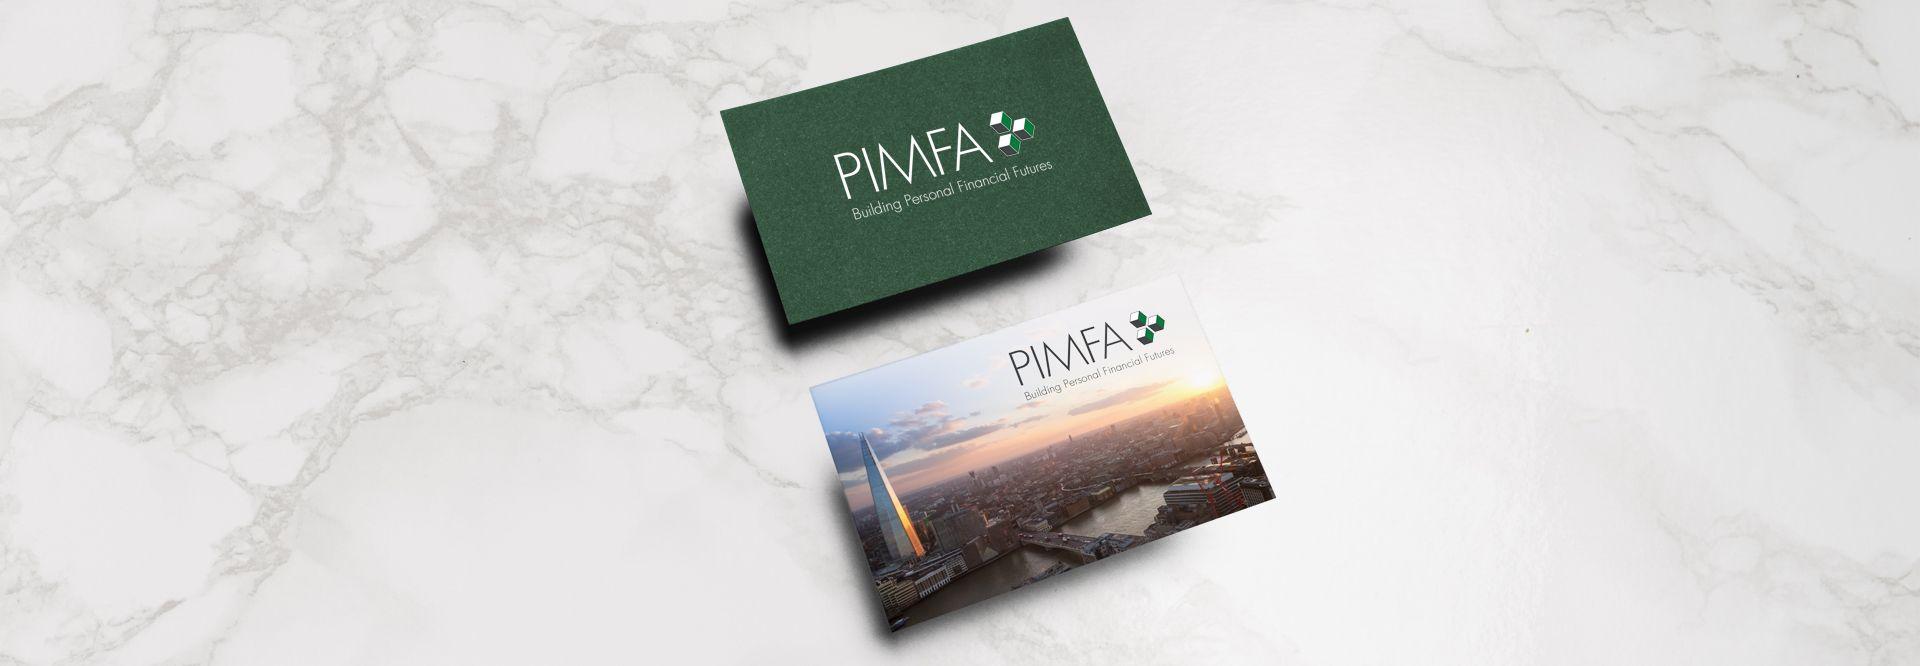 Personal Product Logo - PIMFA Logo and Brand Development |